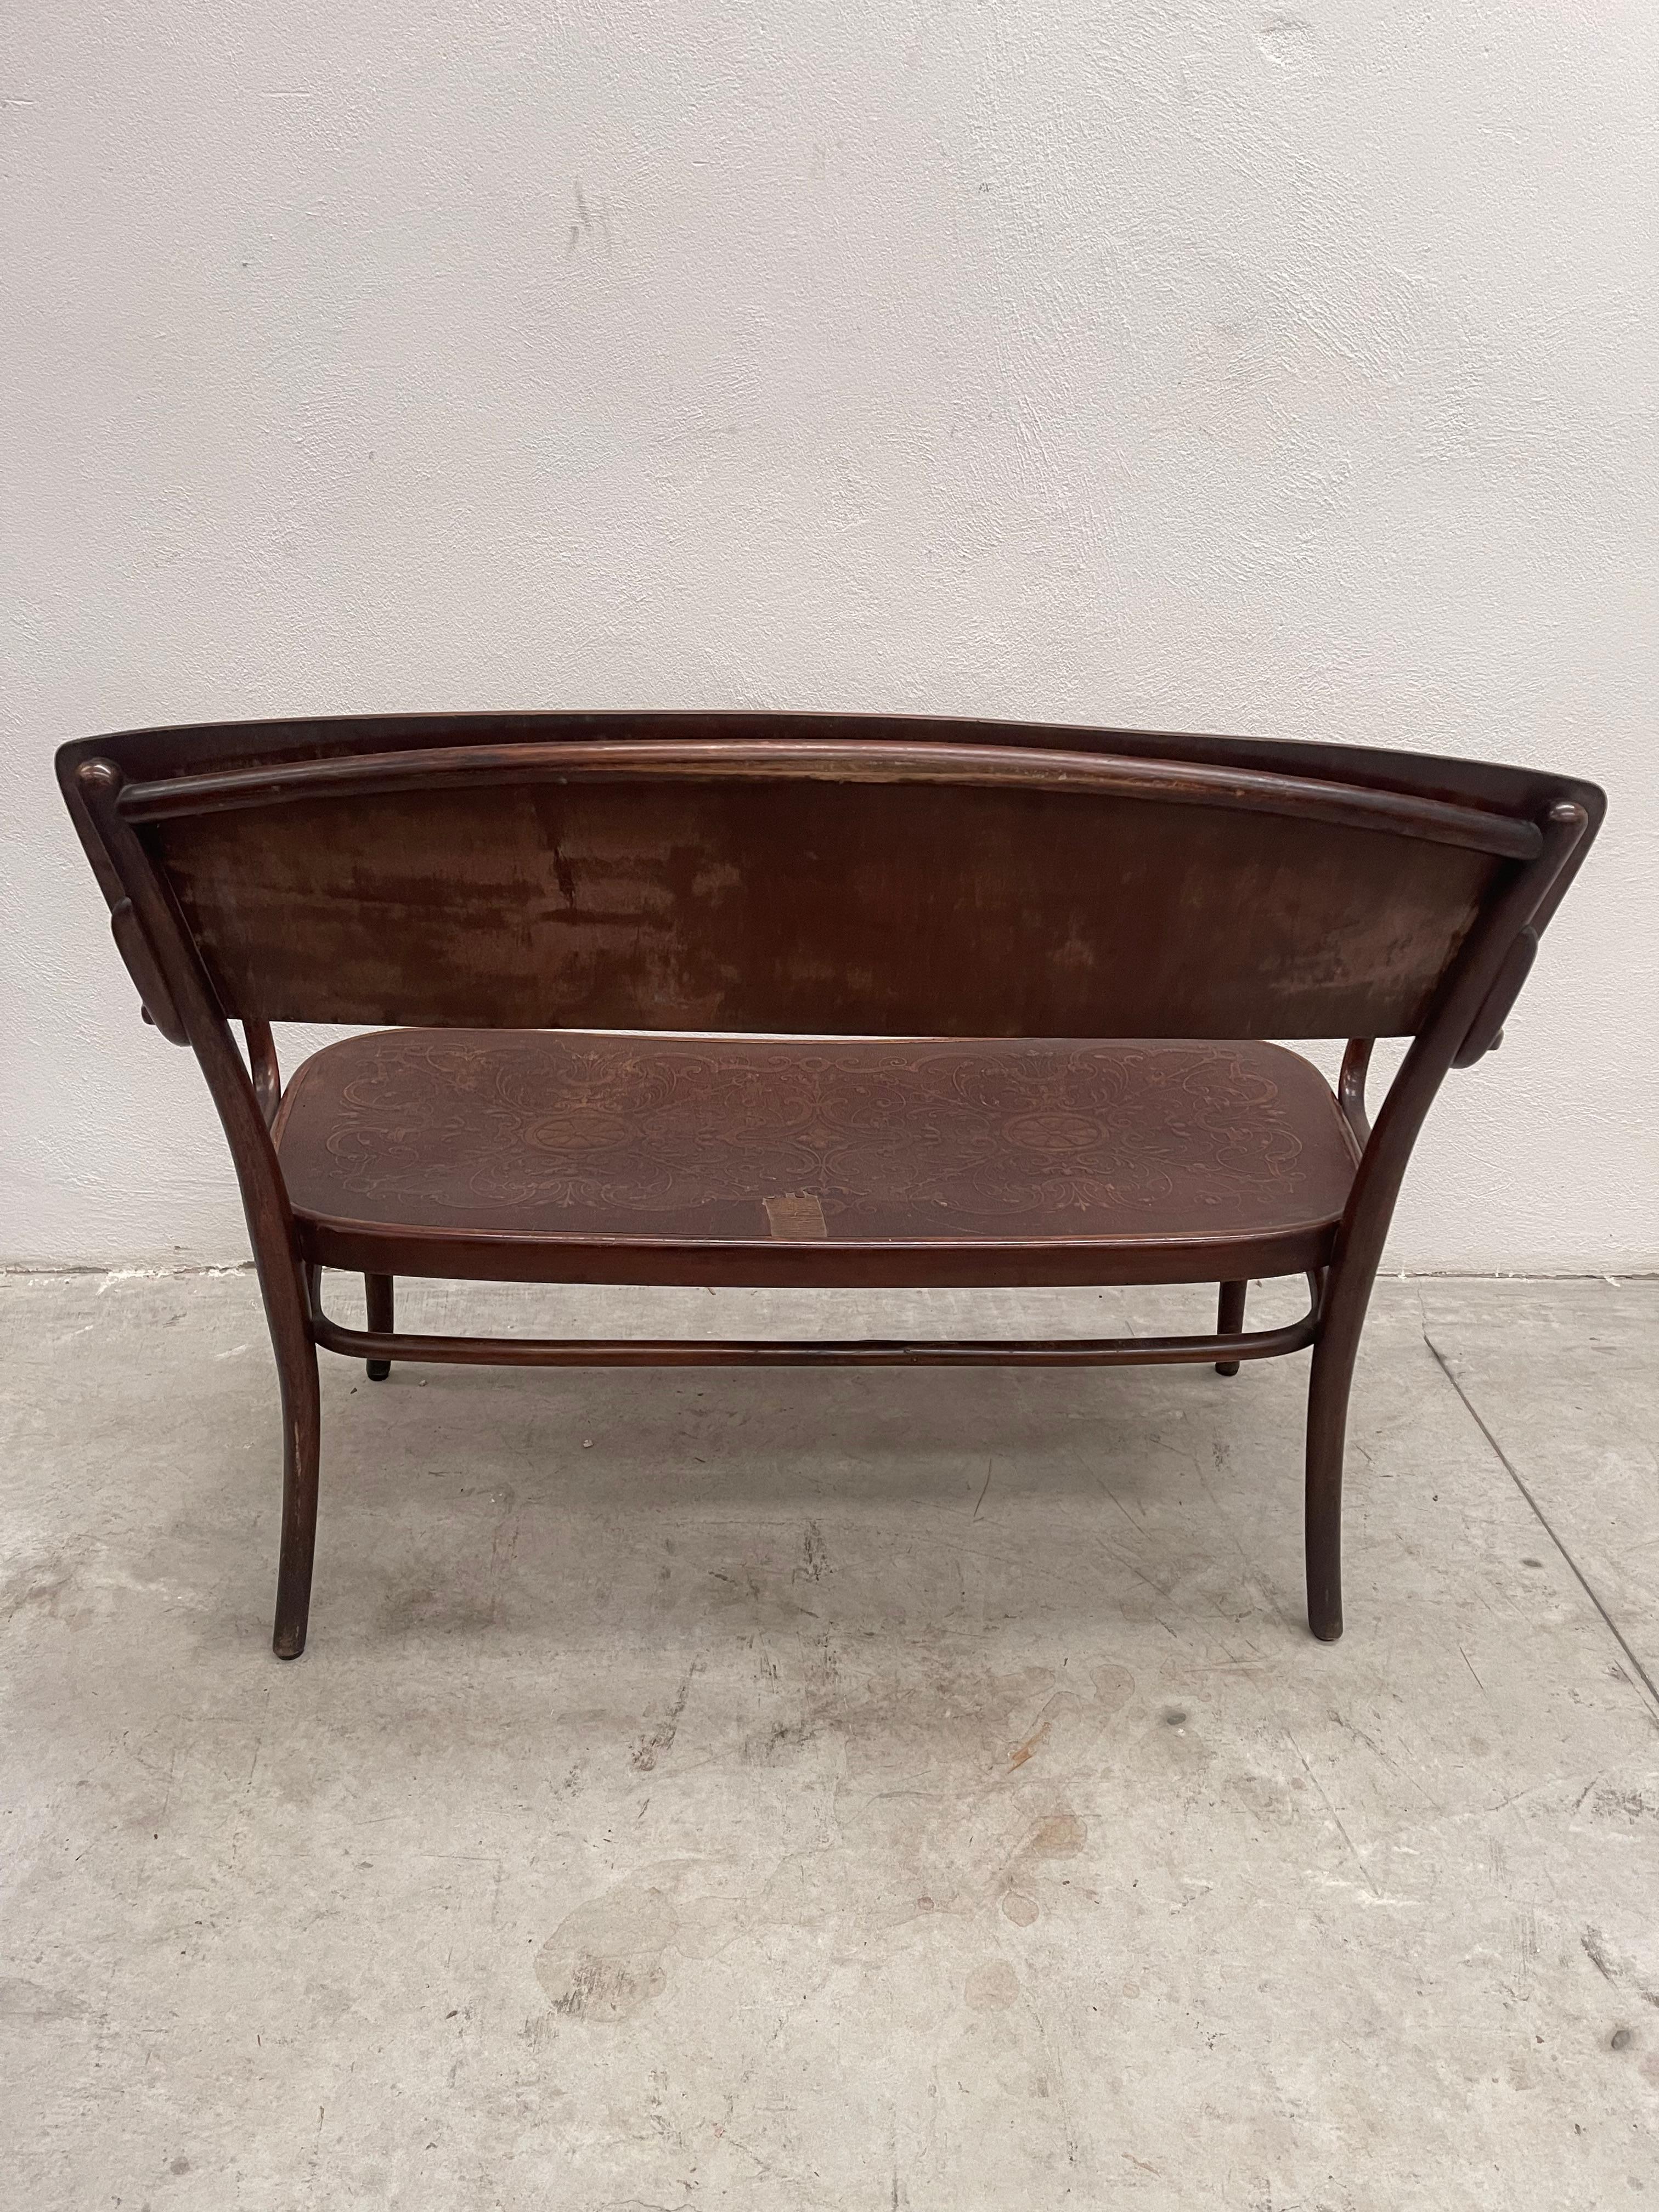 Panca panchina sedia Legno curvo original thonet 1800 In Good Condition For Sale In Cantù, IT